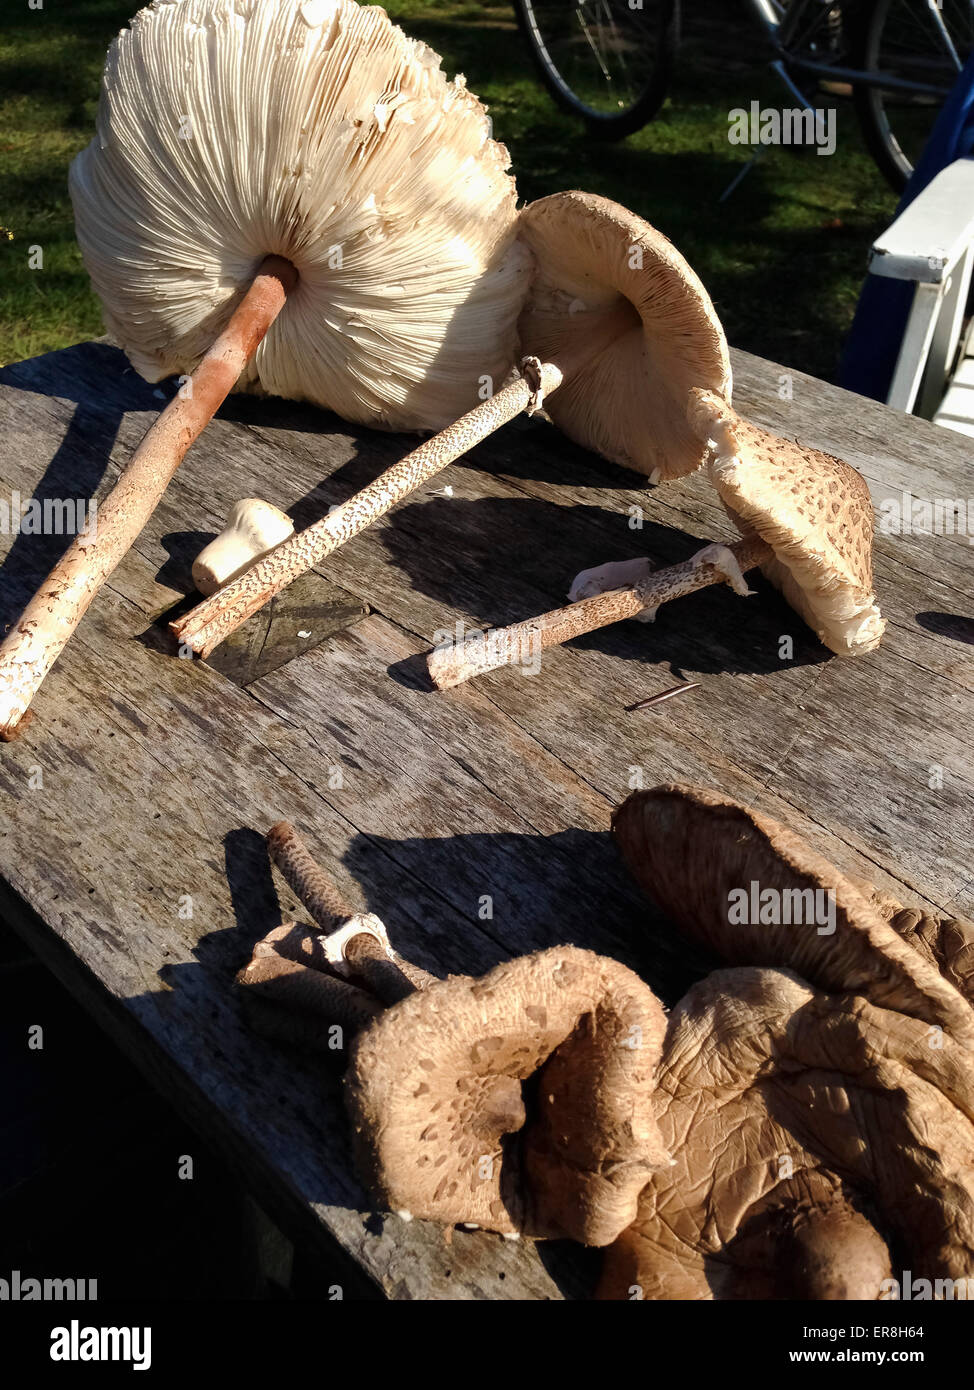 Fresh edible mushrooms on wooden table in yard Stock Photo